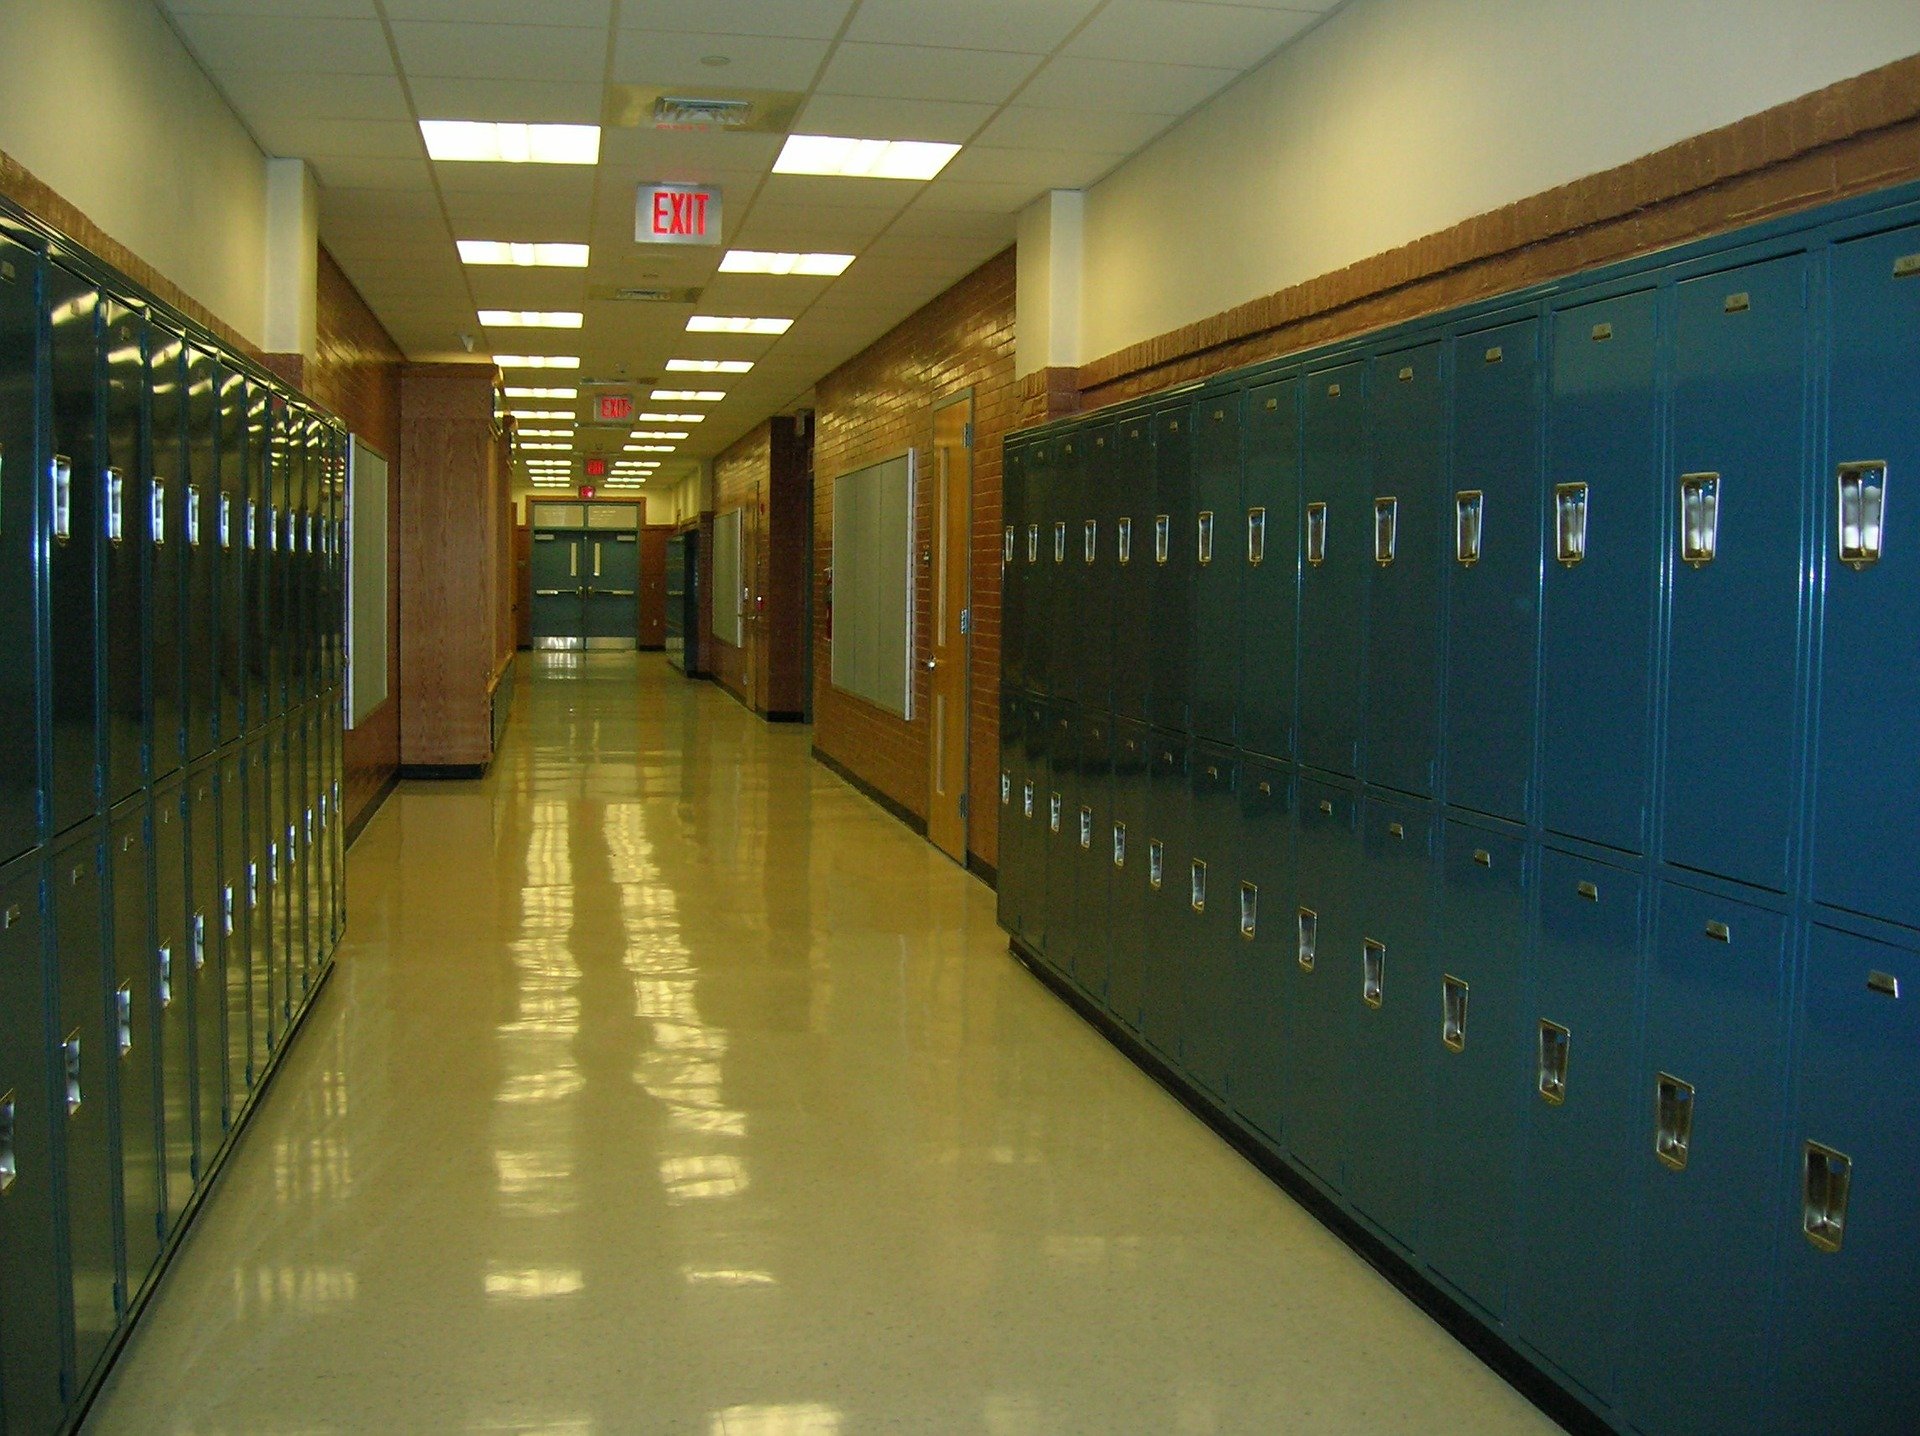 Pictured - High school lockers hallway | Source: Pixabay